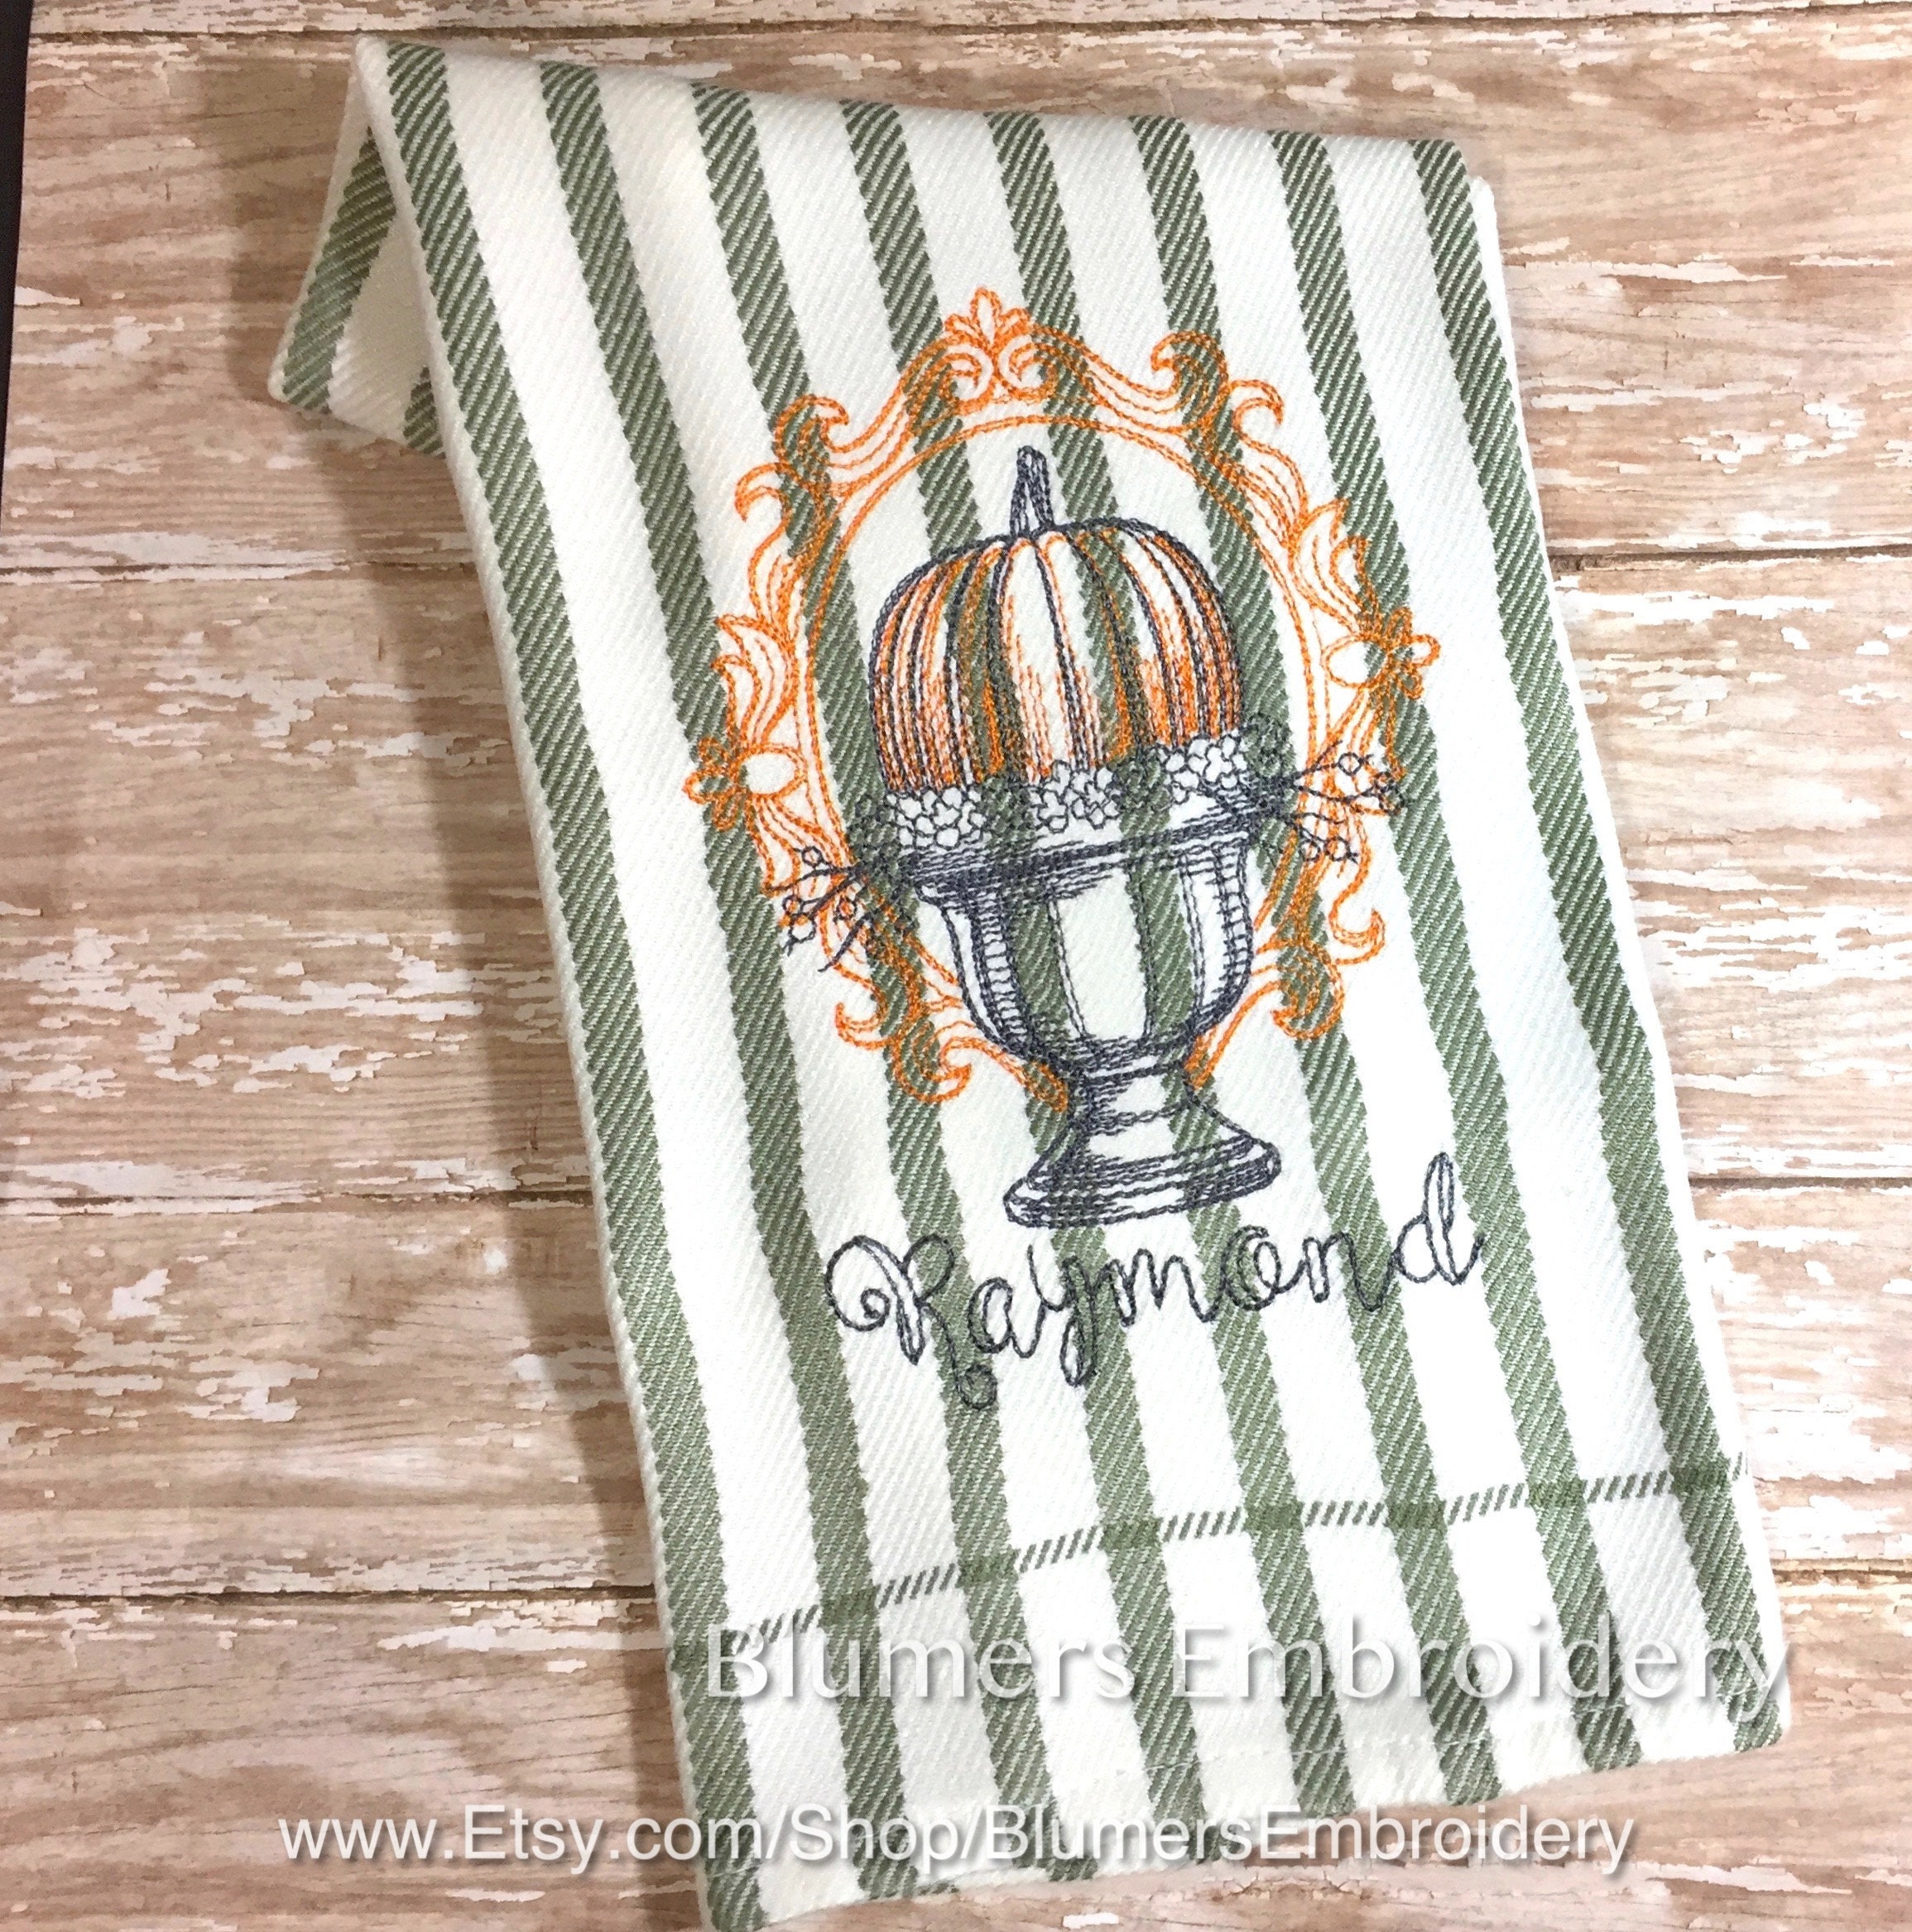 Monogram Waffle Weave Kitchen Towel With Crabs / Monogram Dish Towel / Host  Gift 